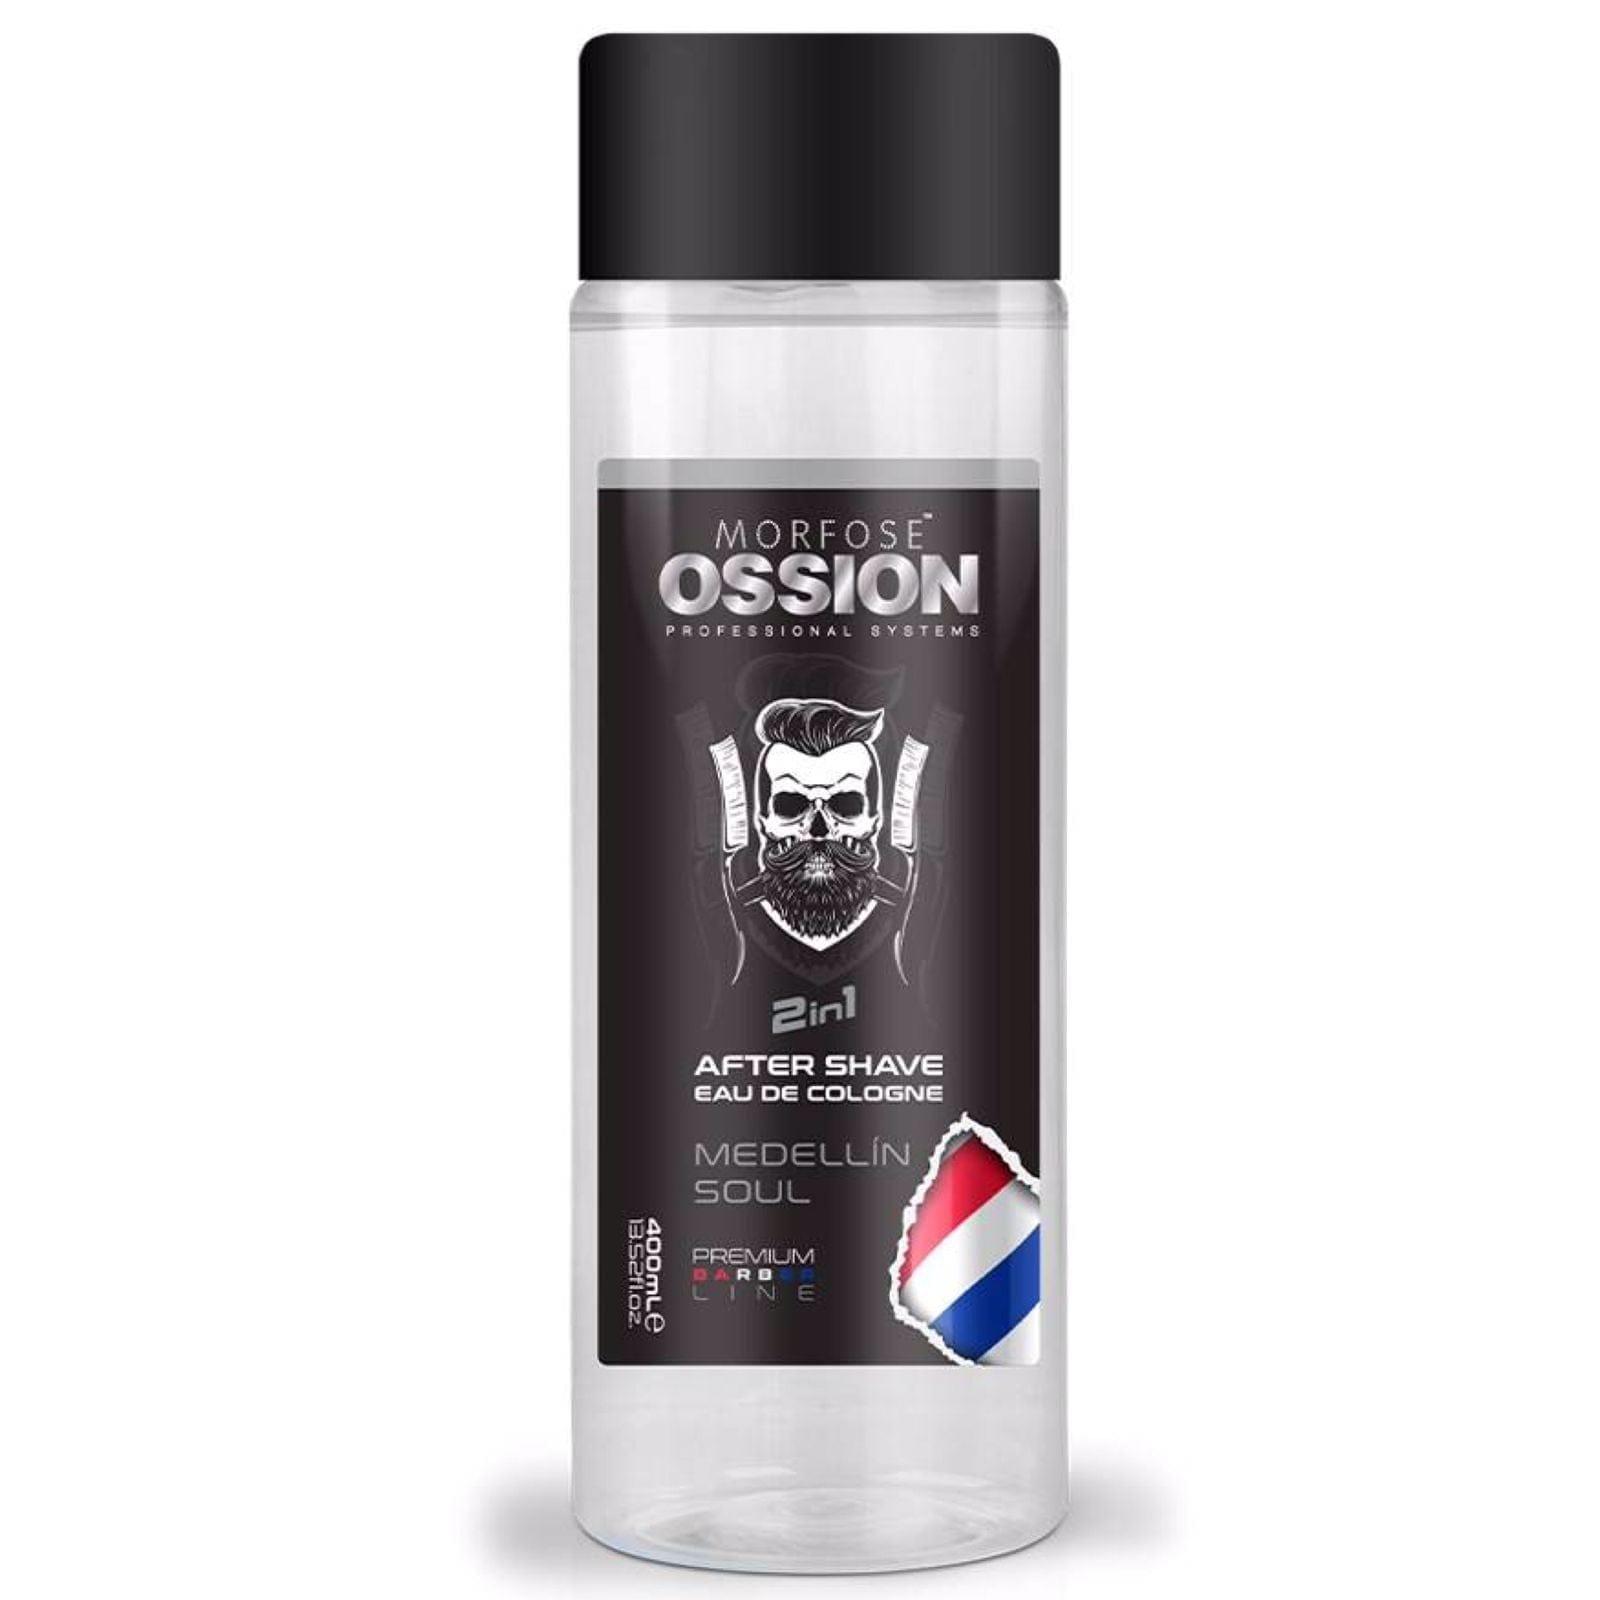 Morfose Ossion 2 in 1 After Shave EAU Cologne Medellin Soul 400ml